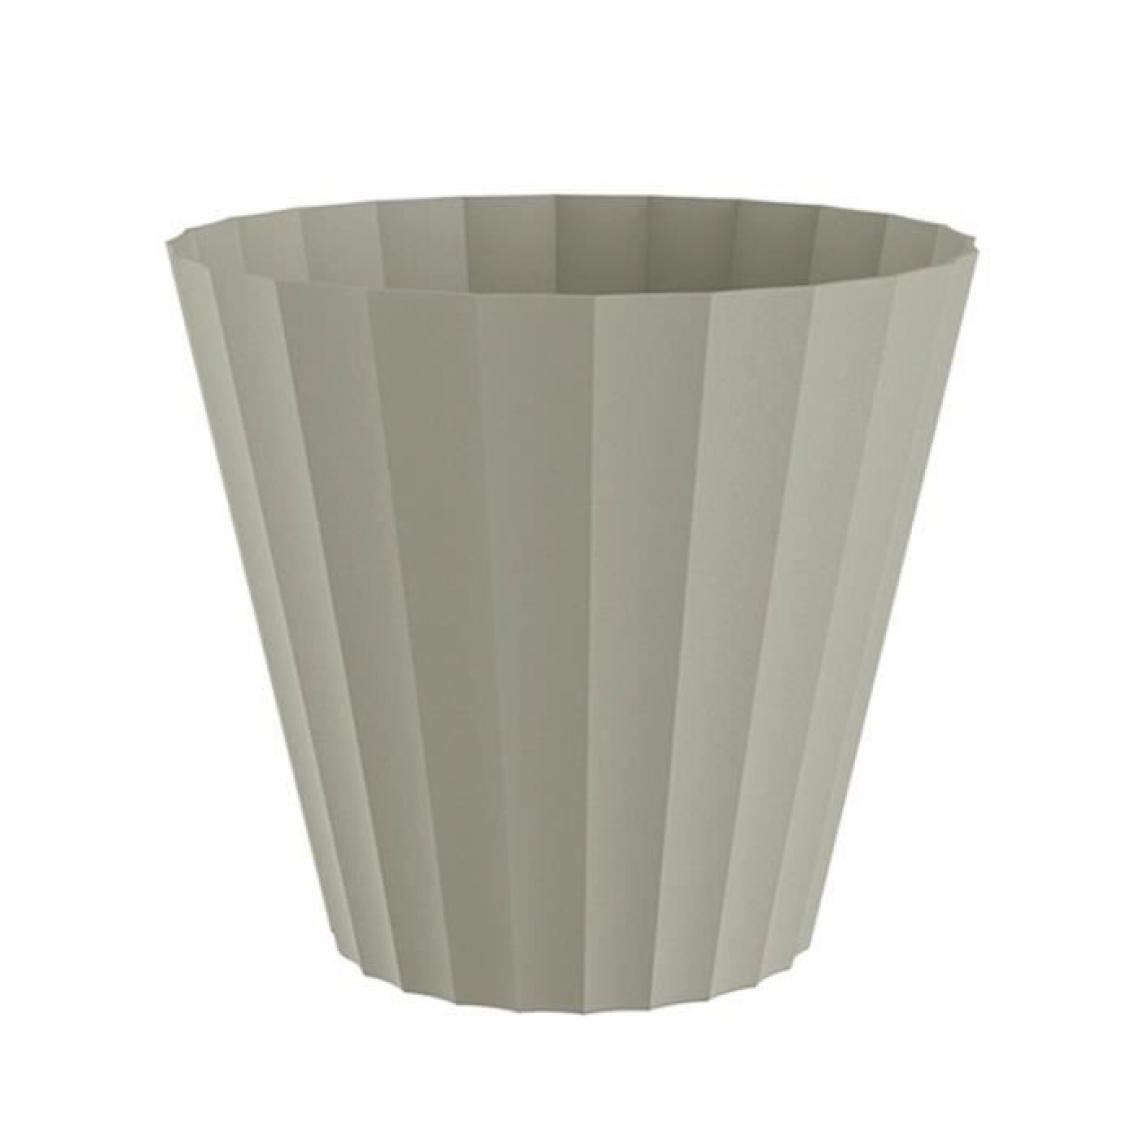 Plastiken - PLASTIKEN Pot Doric Maceta - Ø32 x 29 cm - Ecru - Pots, cache-pots